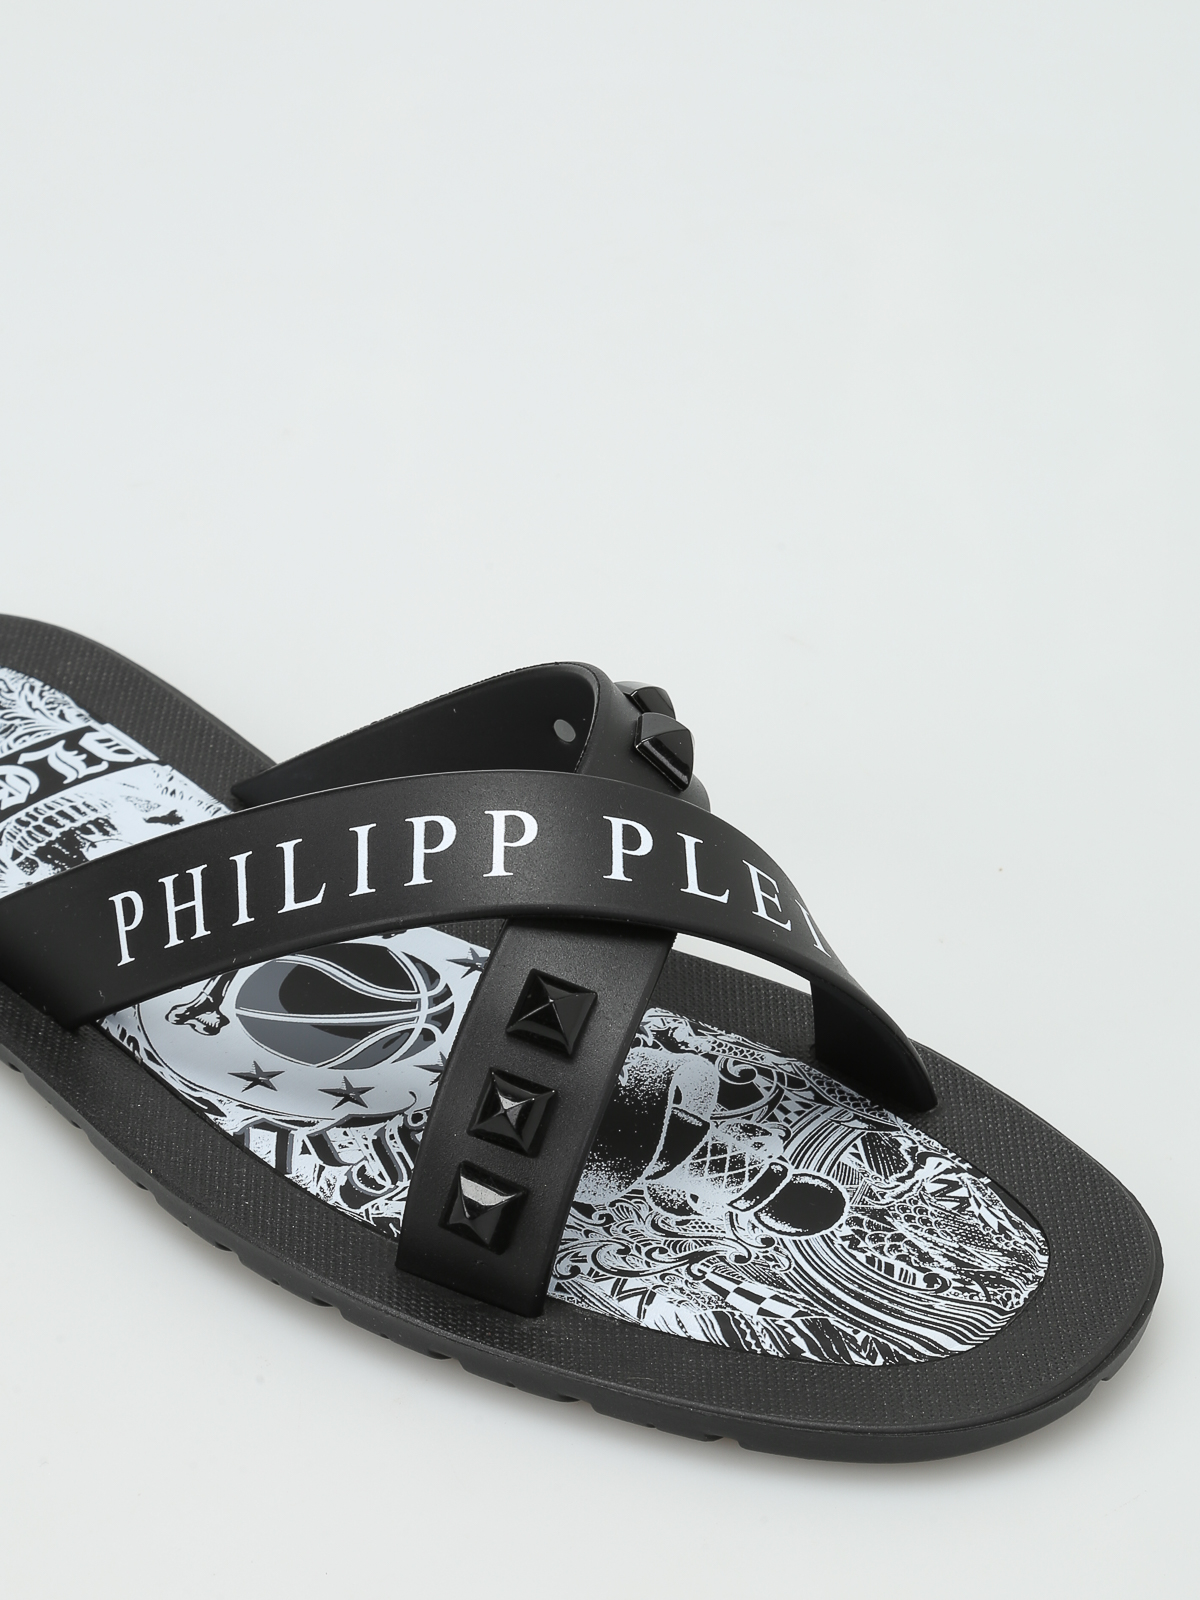 Omitted Violate Inspector Sandals Philipp Plein - Bangor rubber slippers - MSA0018PXV025N02K